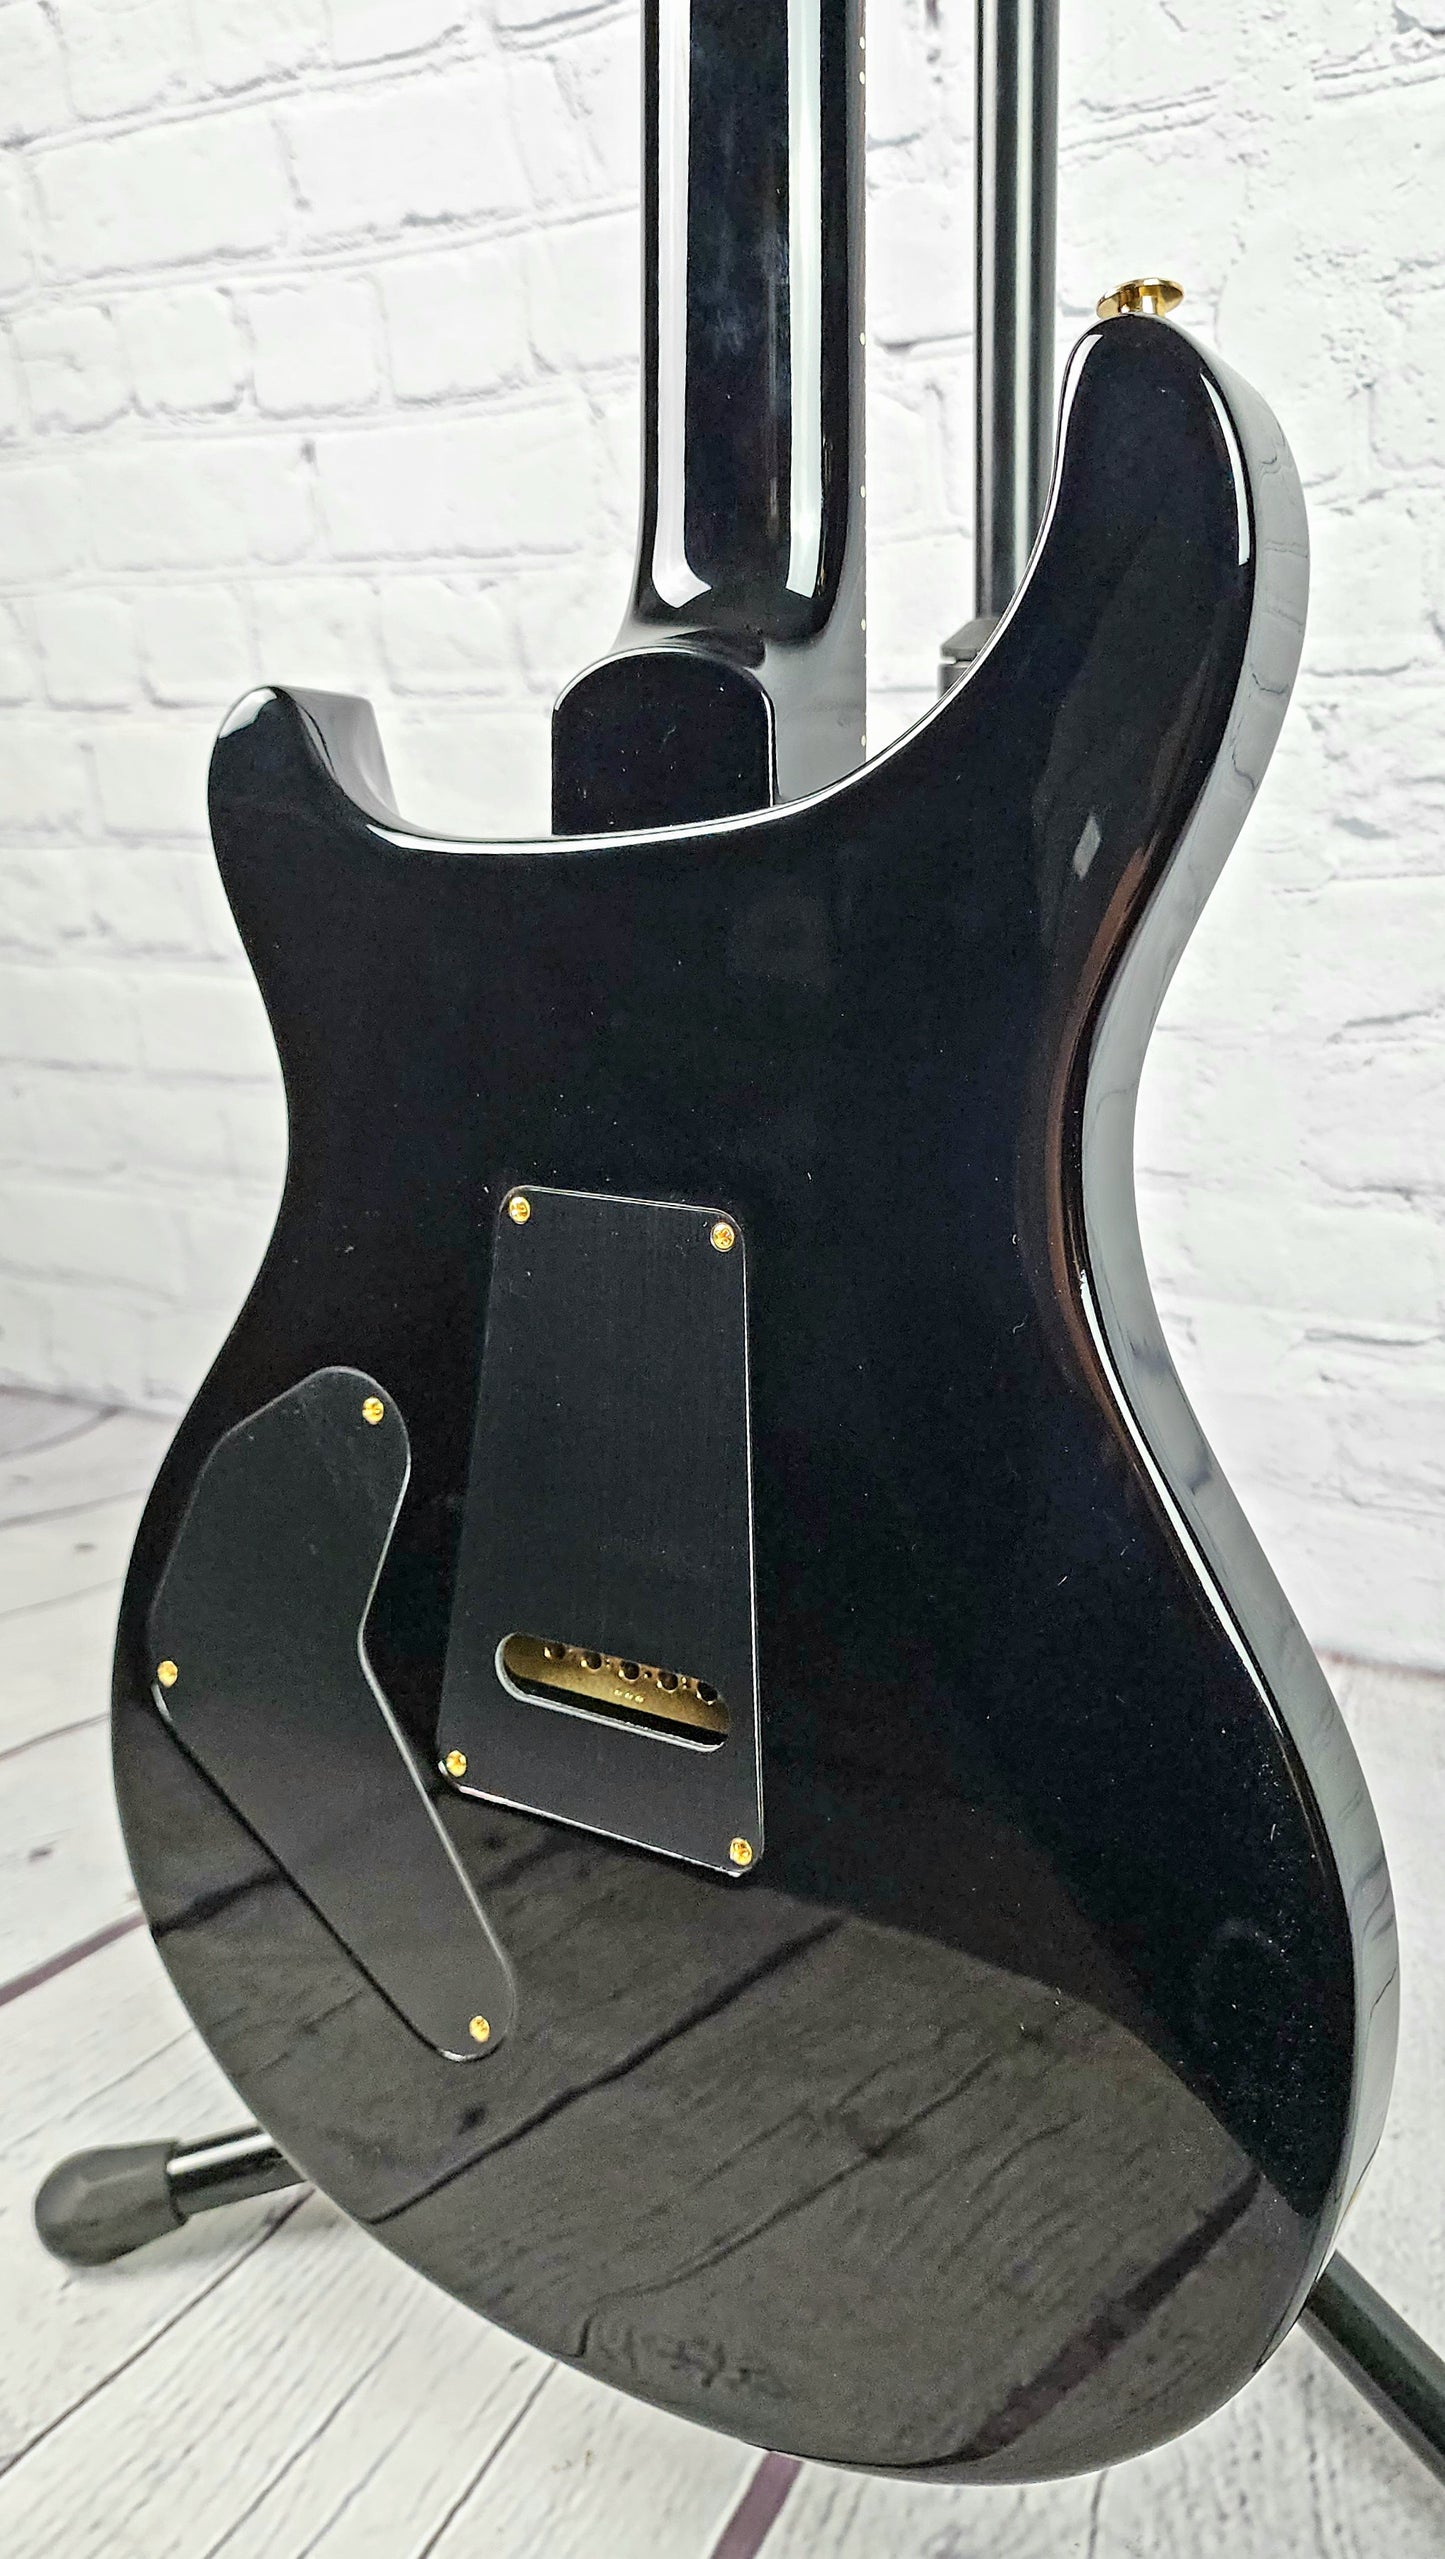 Paul Reed Smith PRS Custom 24 Piezo 10 Top Electric Guitar Amber Smokeburst Pattern Regular